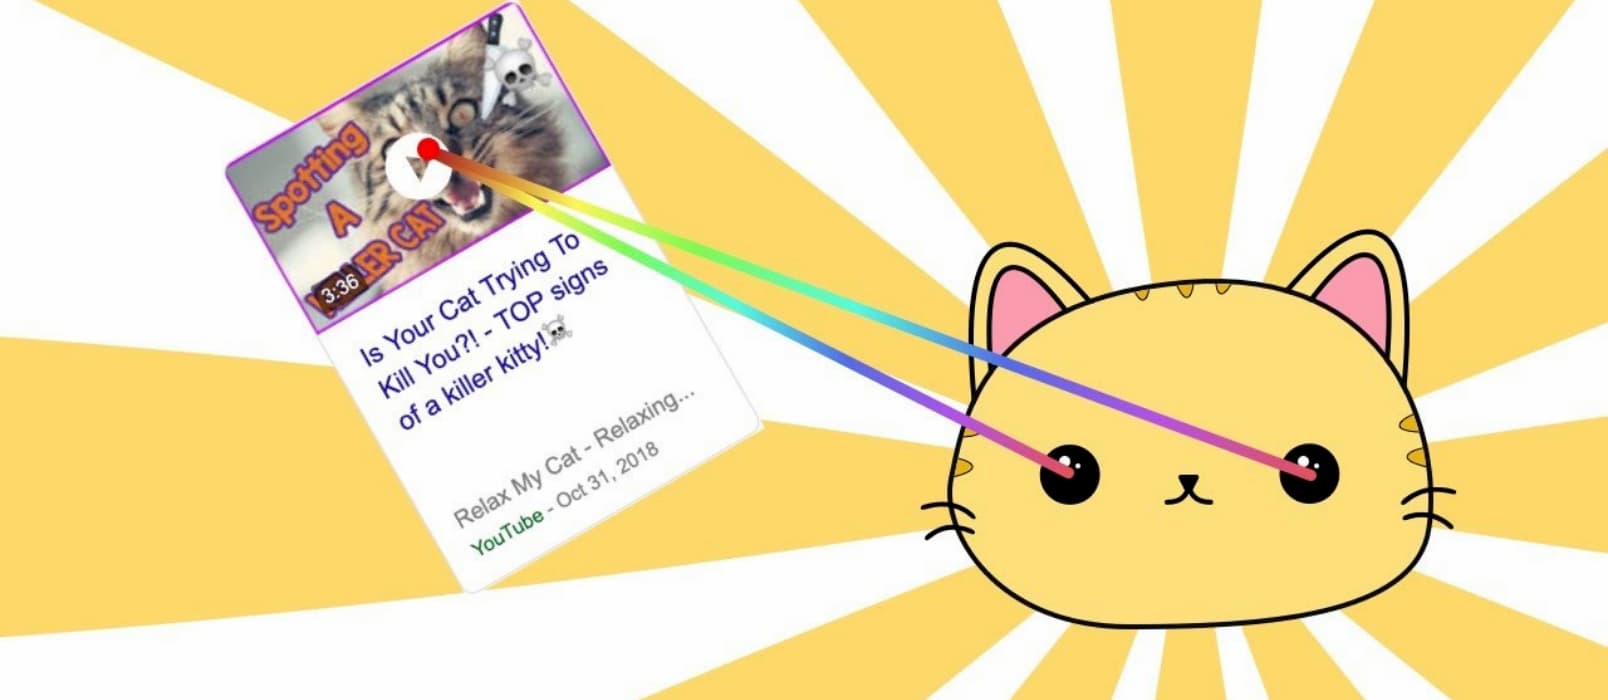 Laser Cat - 好无聊啊，激光猫，吃掉它[Chrome]